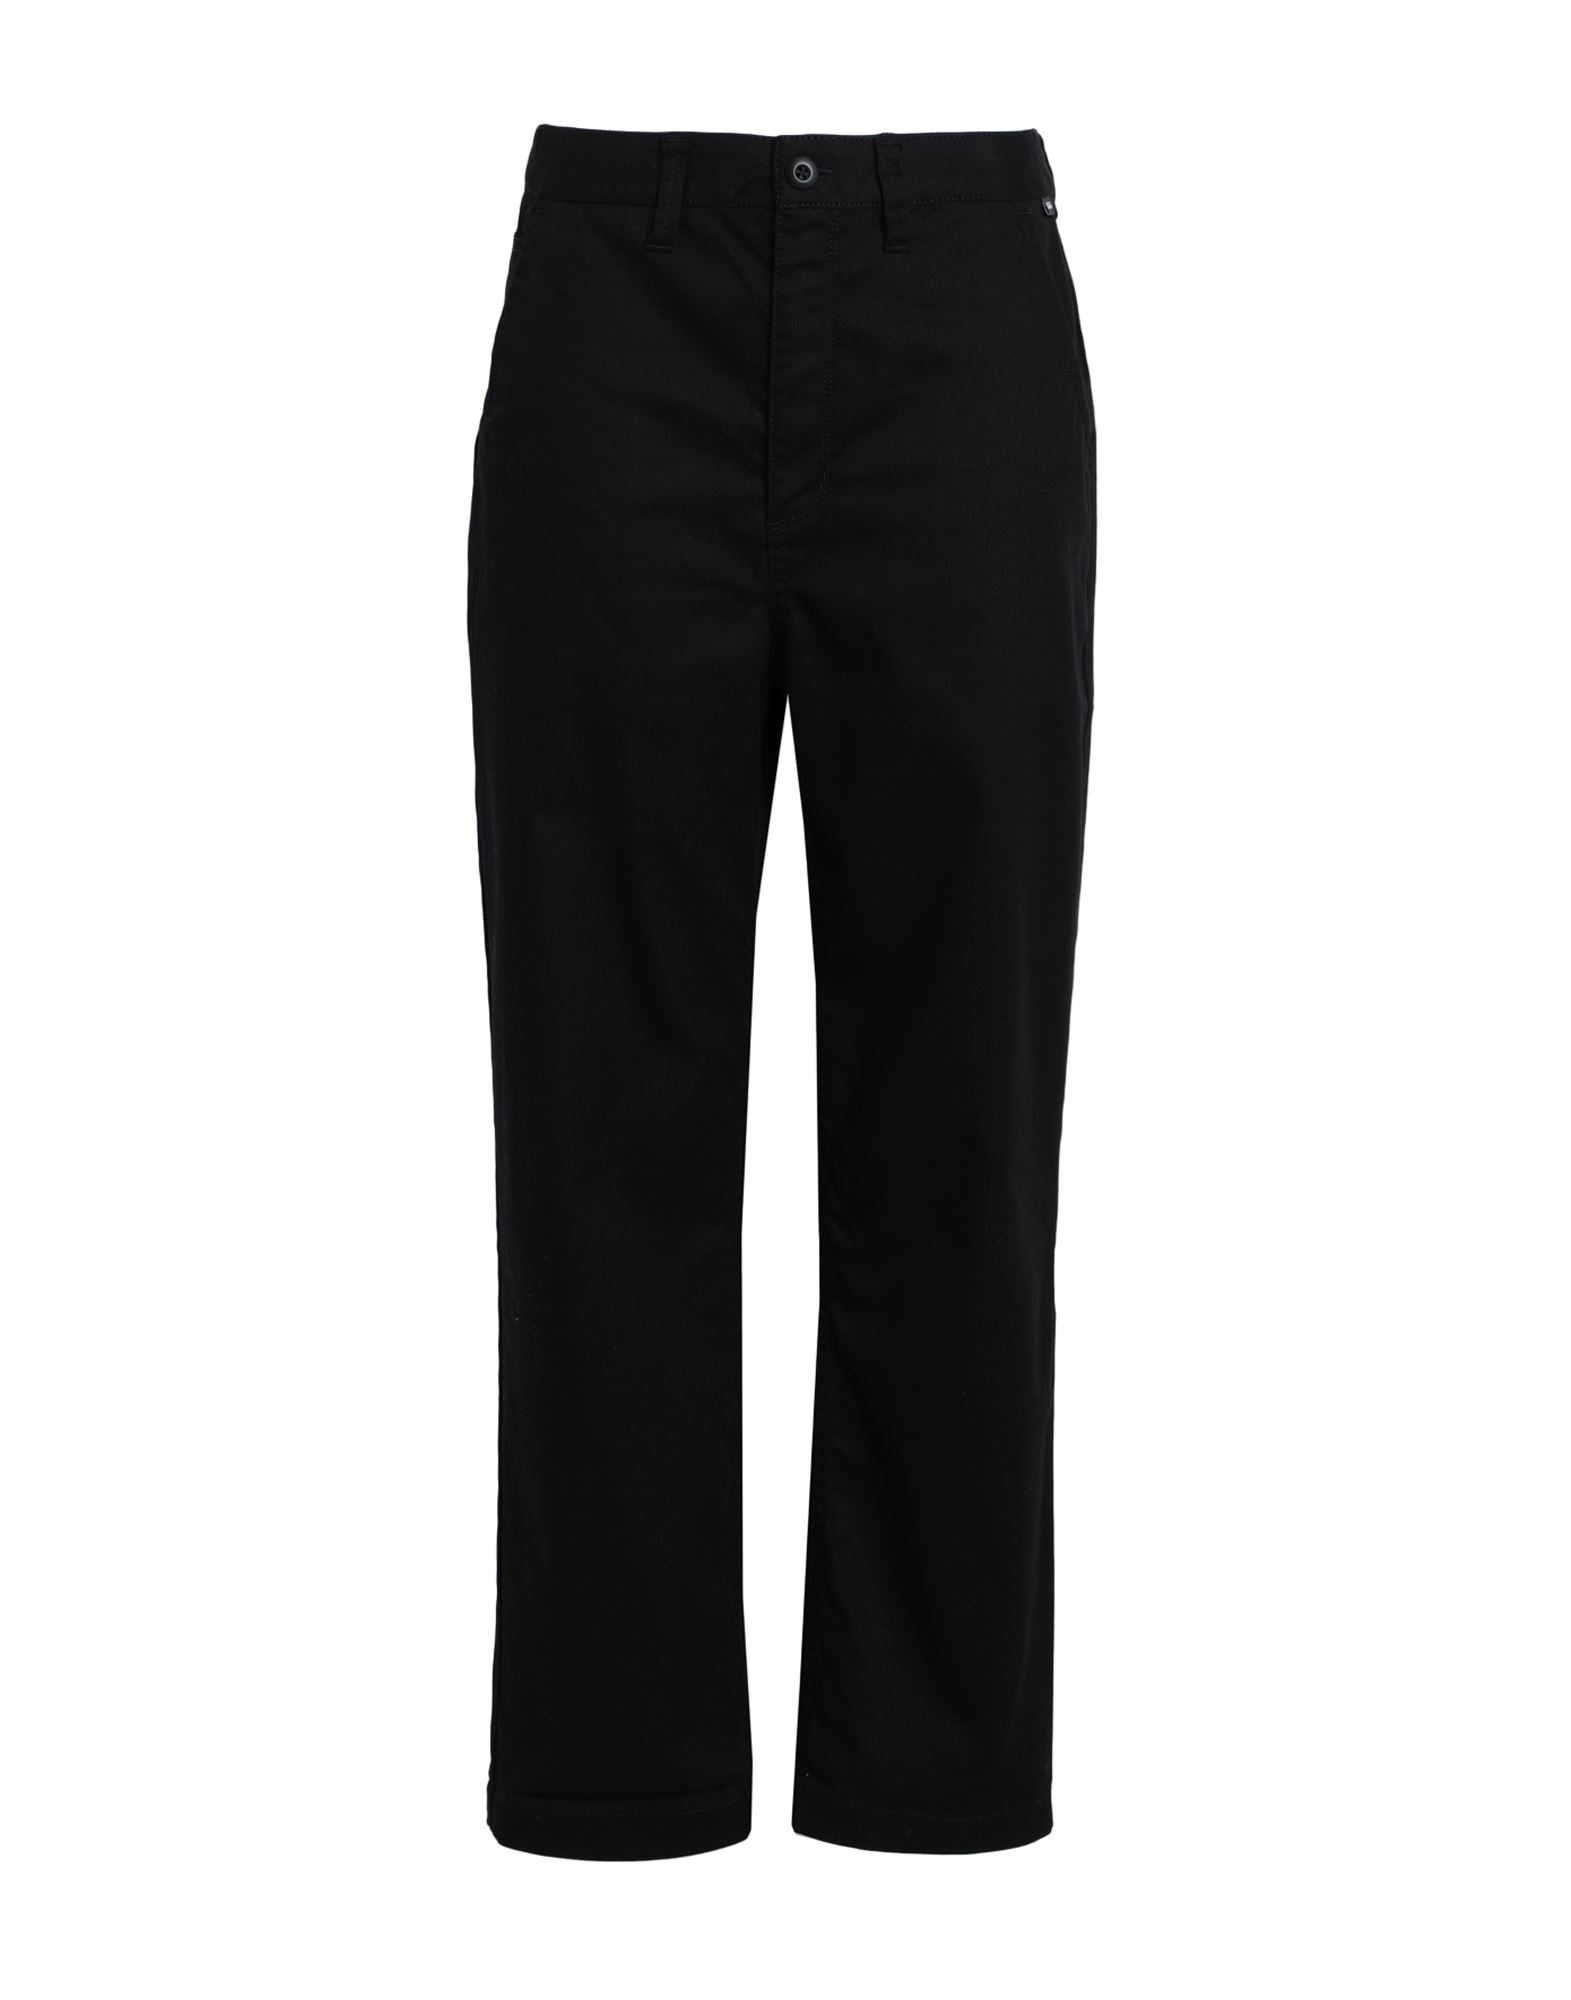 Vans Wm Authentic Wmn Chino Woman Pants Black Size 28 Cotton, Polyester, Elastane